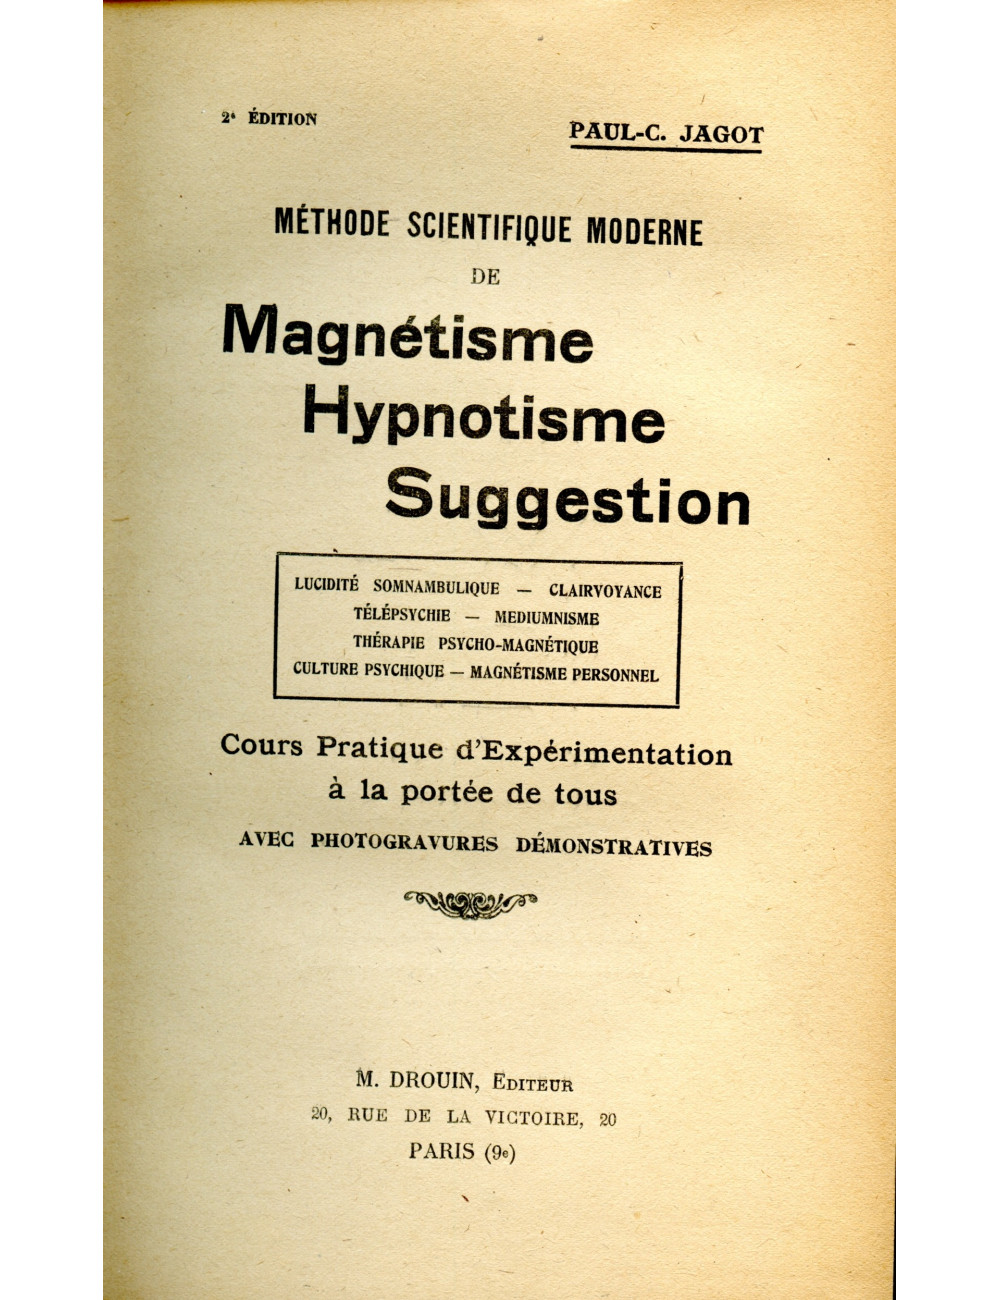 METHODE SCIENTIFIQUE MODERNE DE MAGNETISME - HYPNOTISME - SUGGESTION (Paul-C. Jagot)